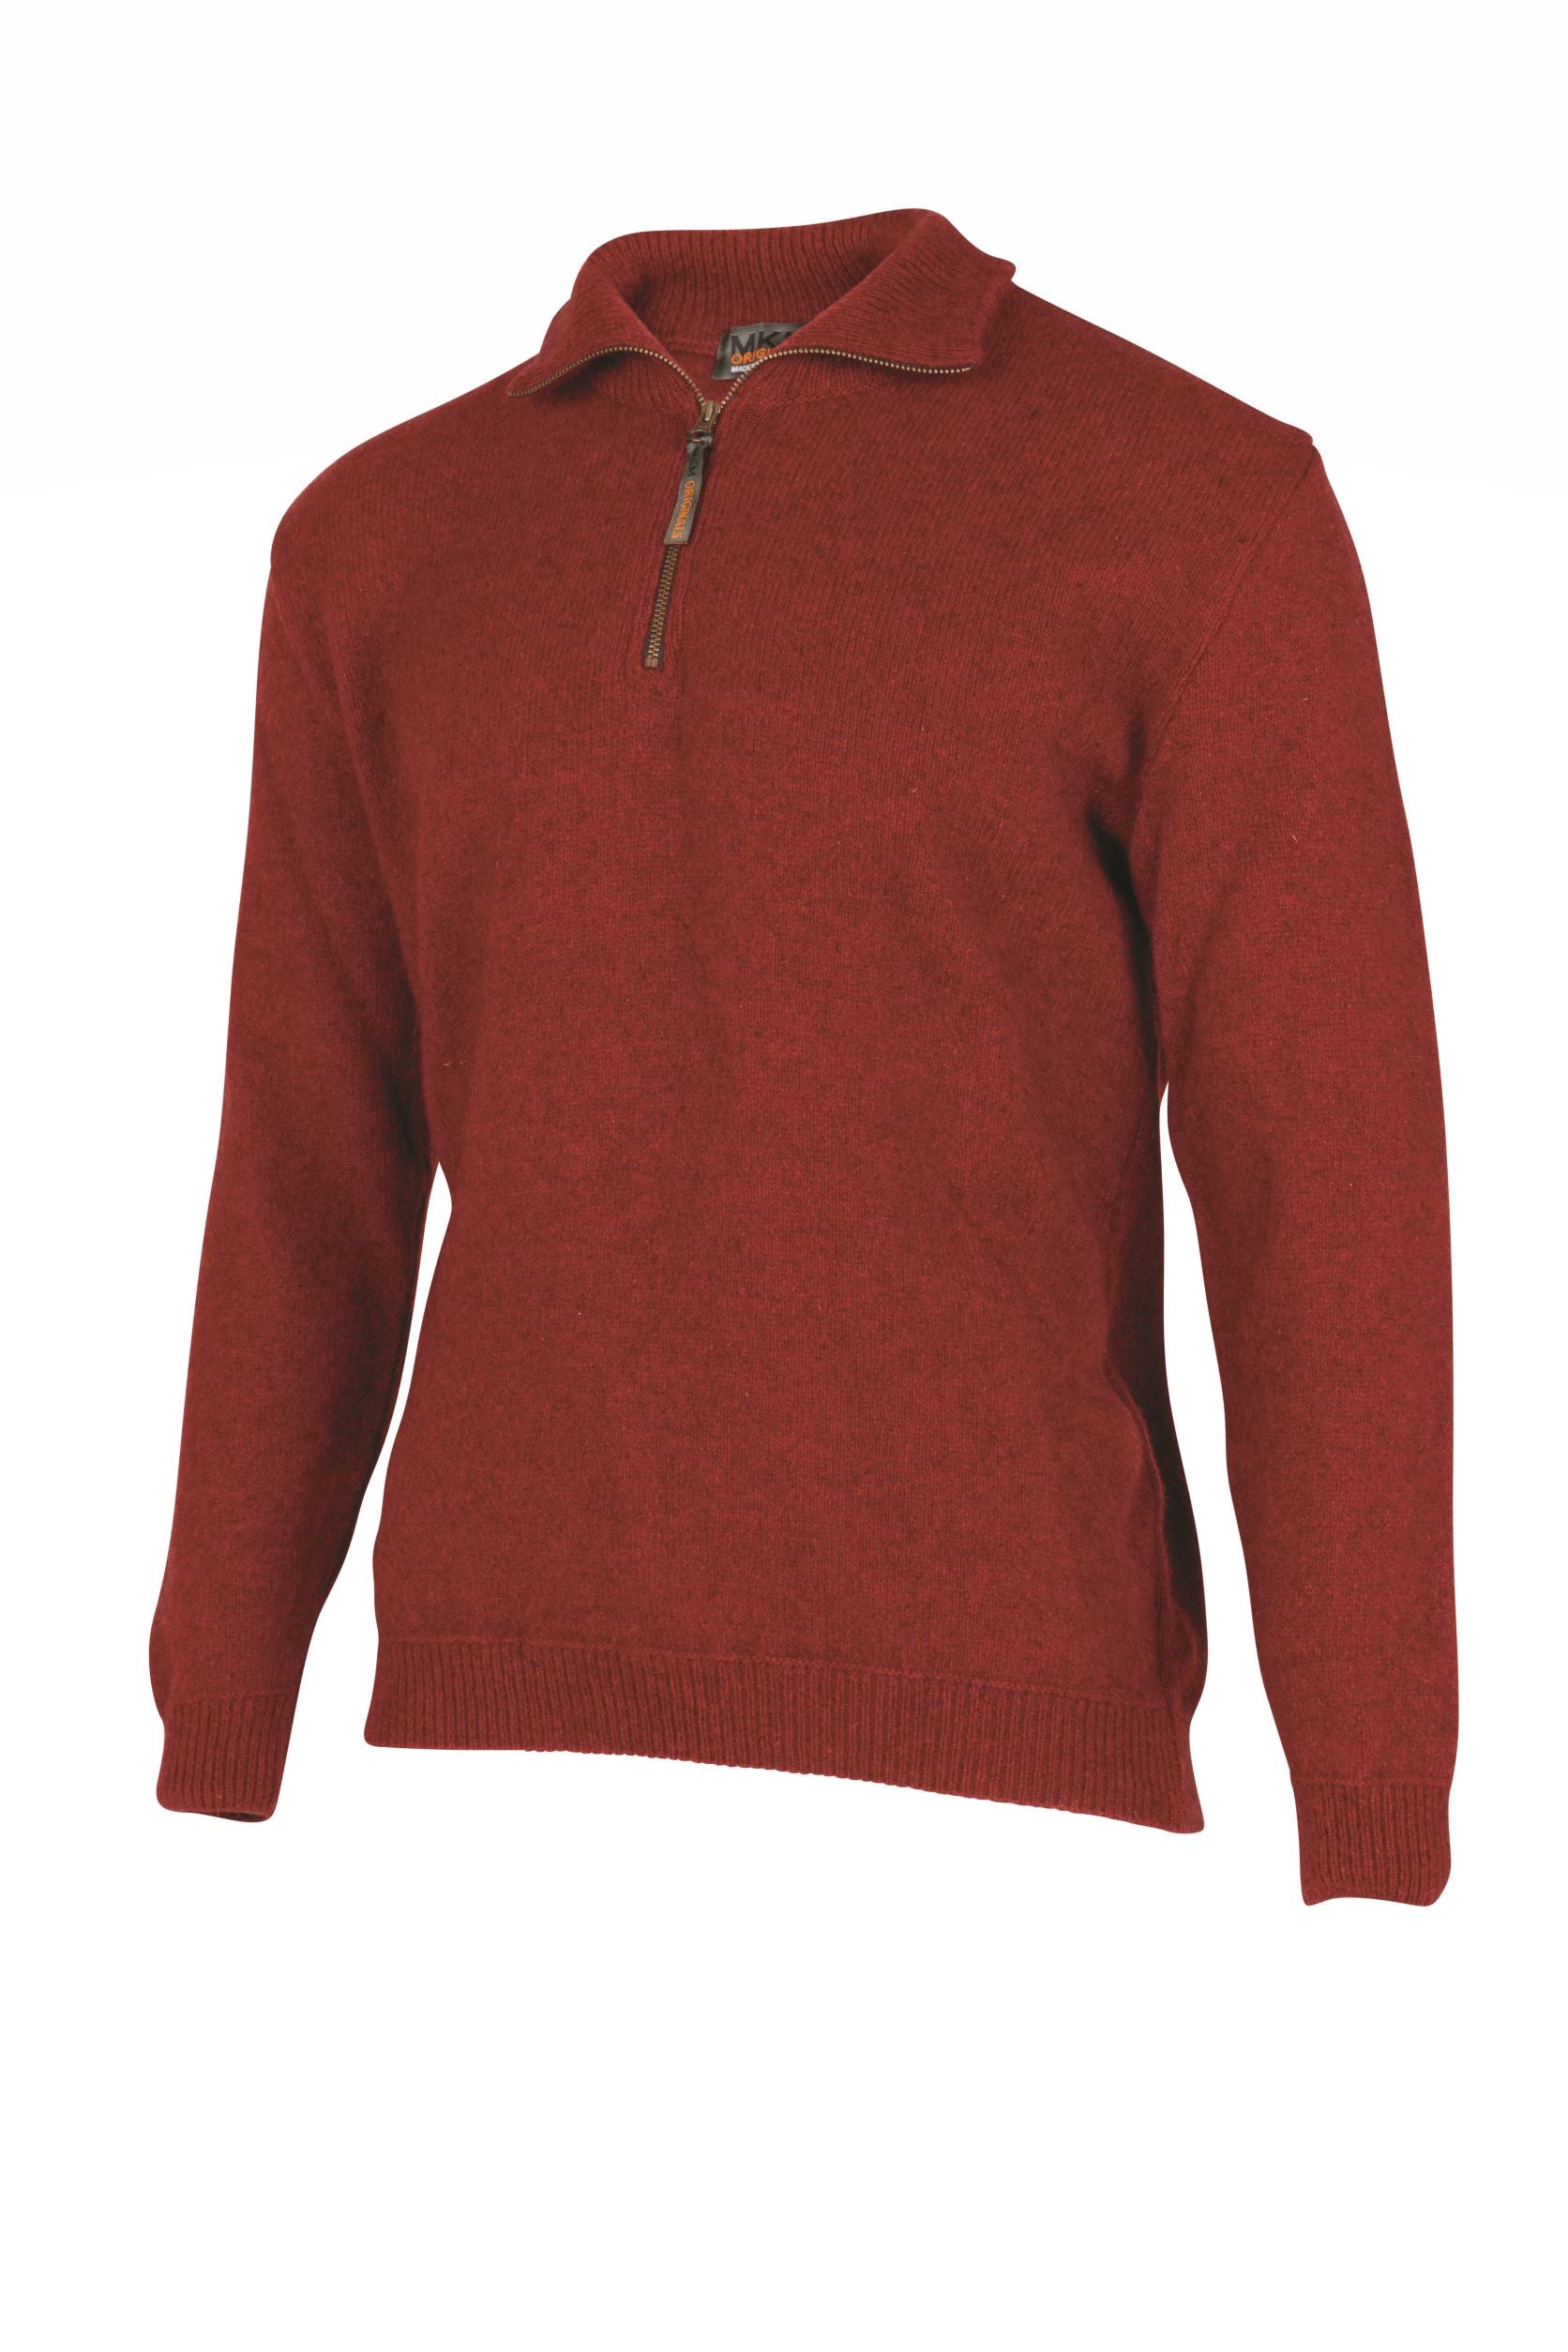 Possum Merino Legend Zip Sweater - MKM Knitwear